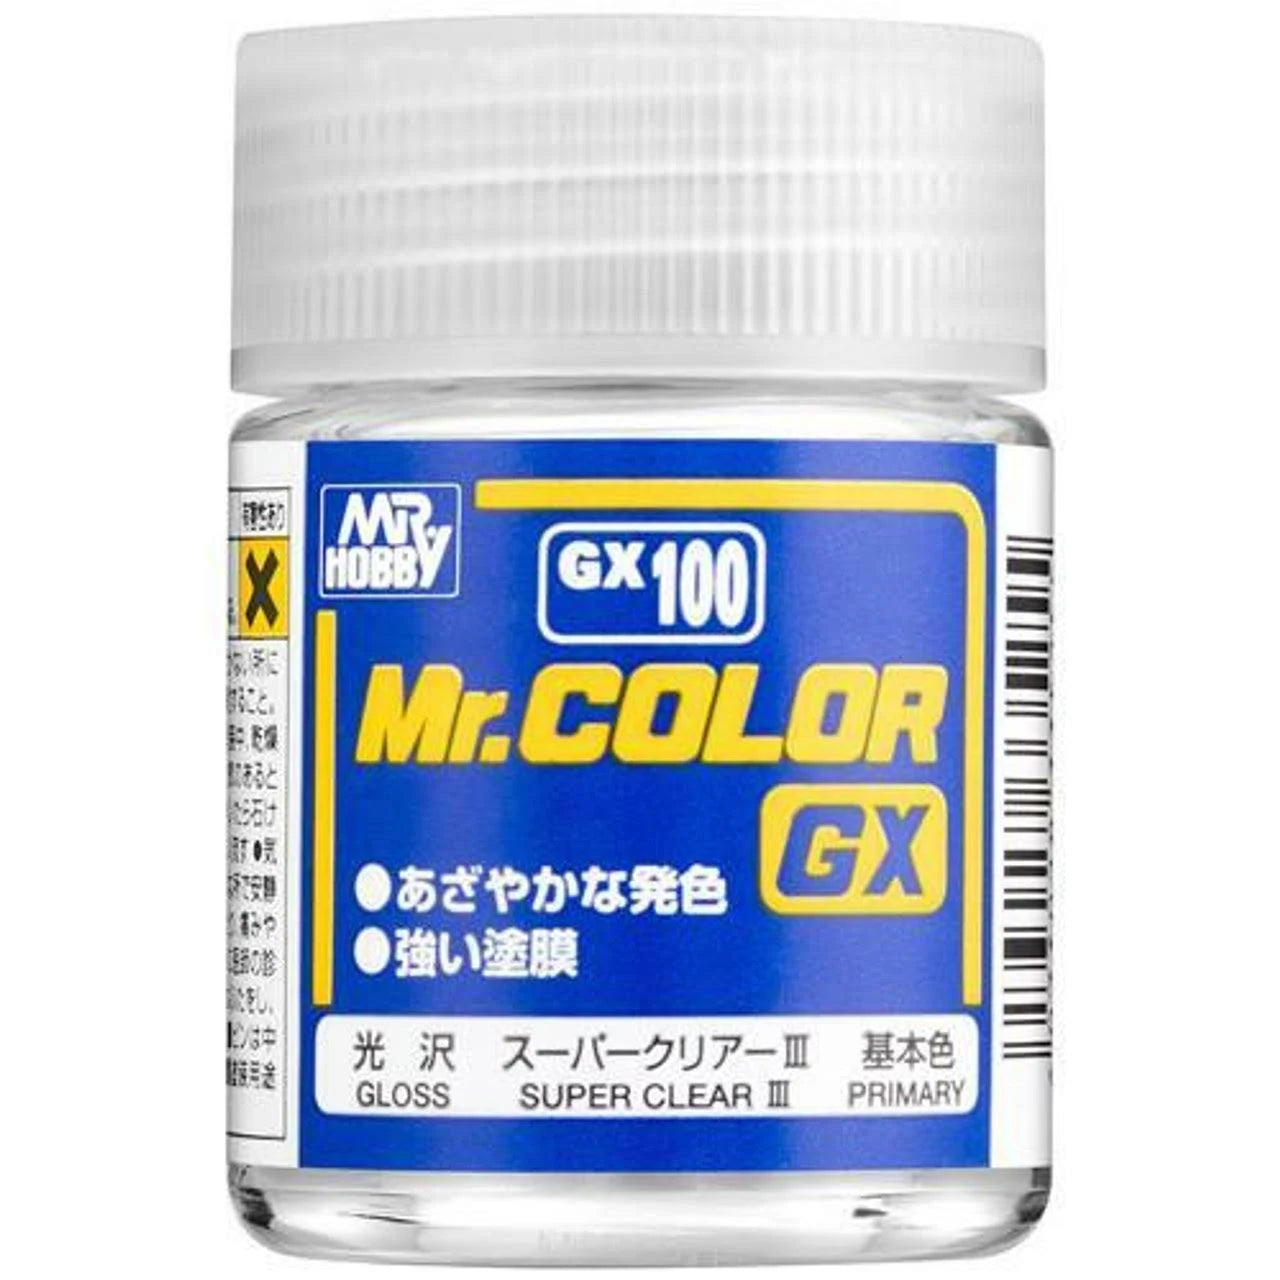 Mr. Color GX100 - Super Clear III - Gloss (18ml)